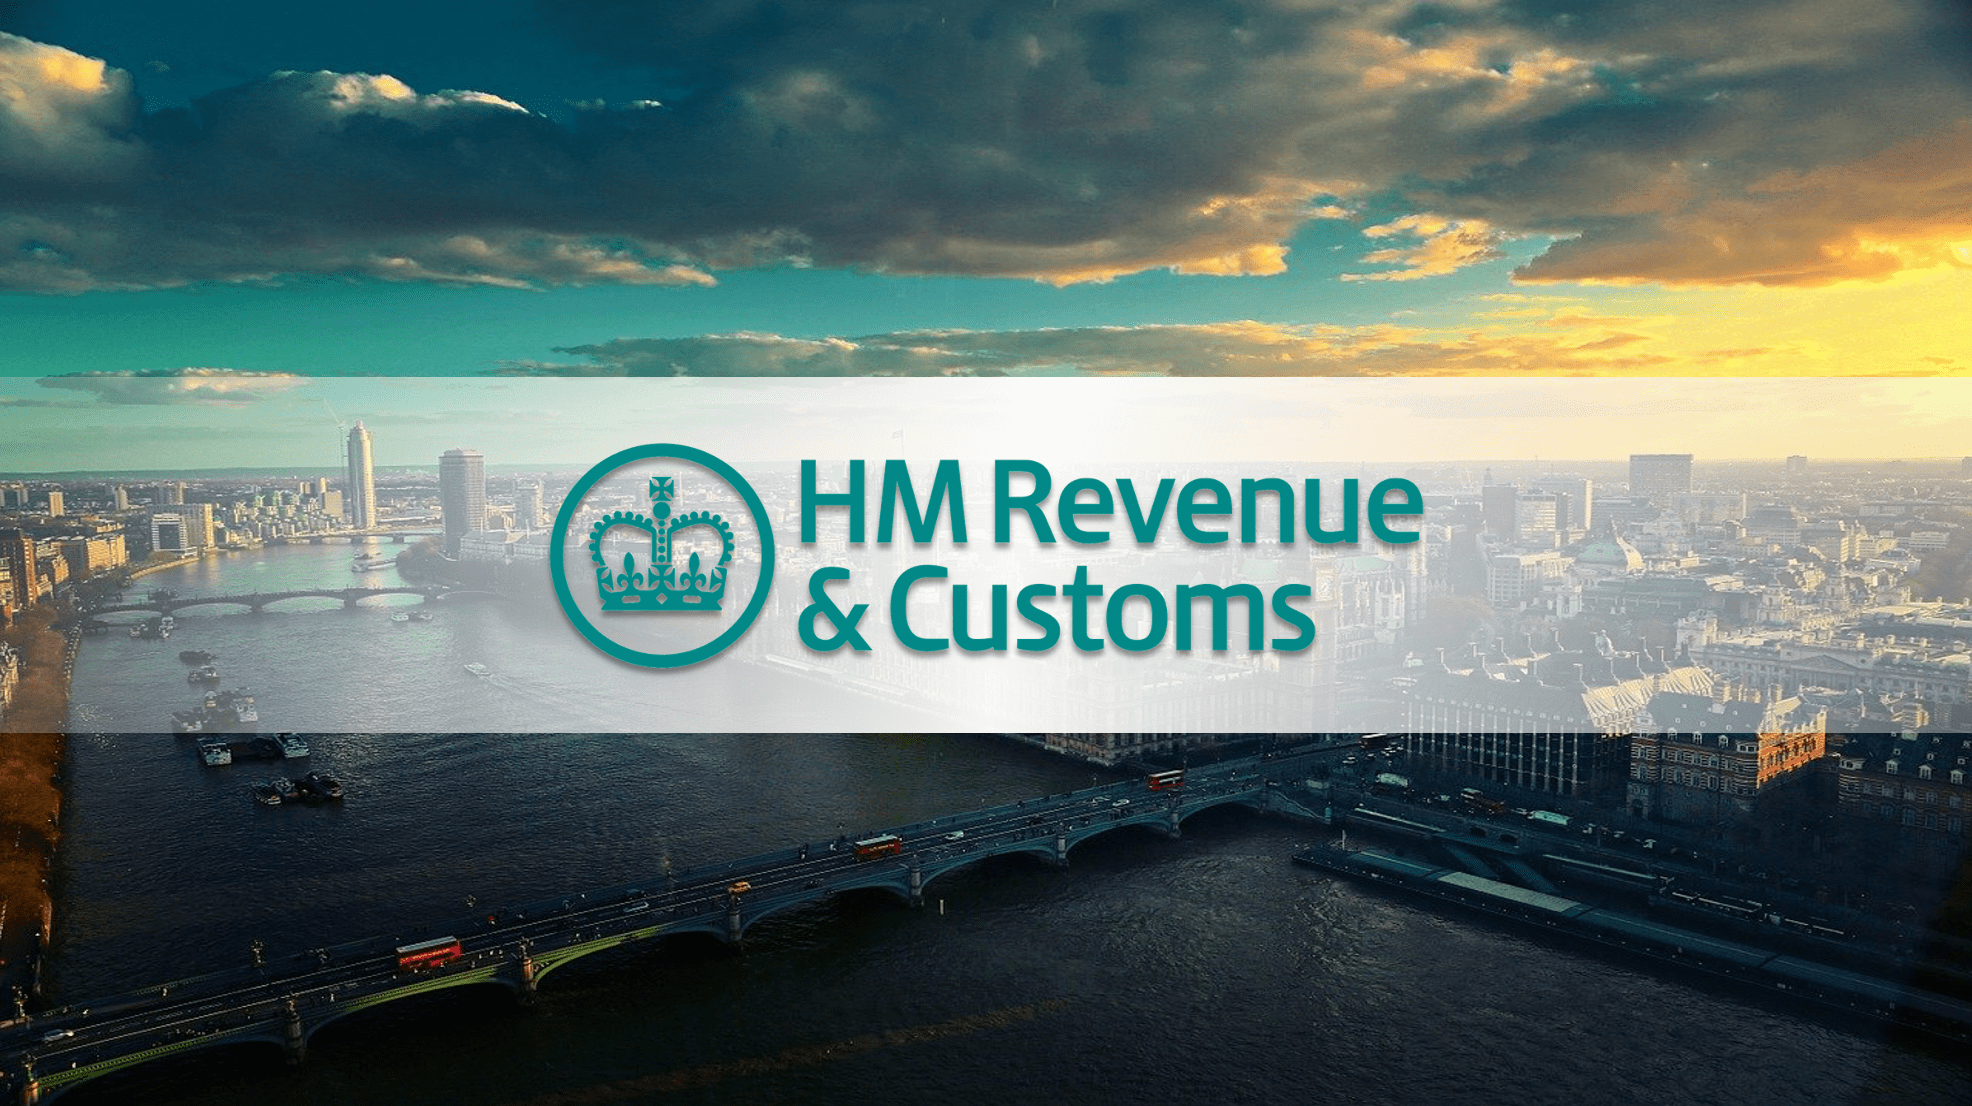 HMRC Smishing Tax Scam Targets UK Banking Customers